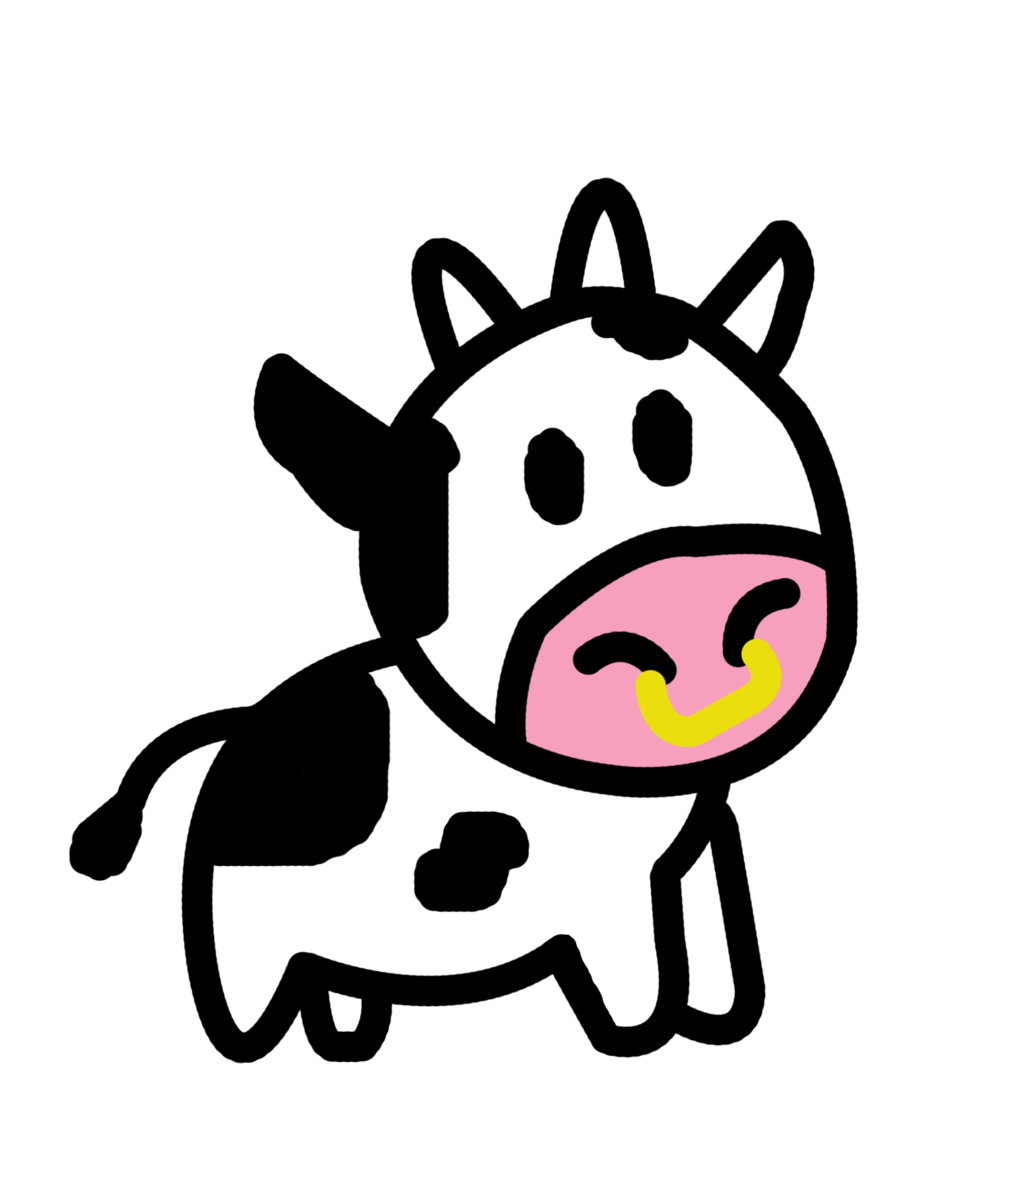 Pics Of Cartoon Cows | Free Download Clip Art | Free Clip Art | on ...